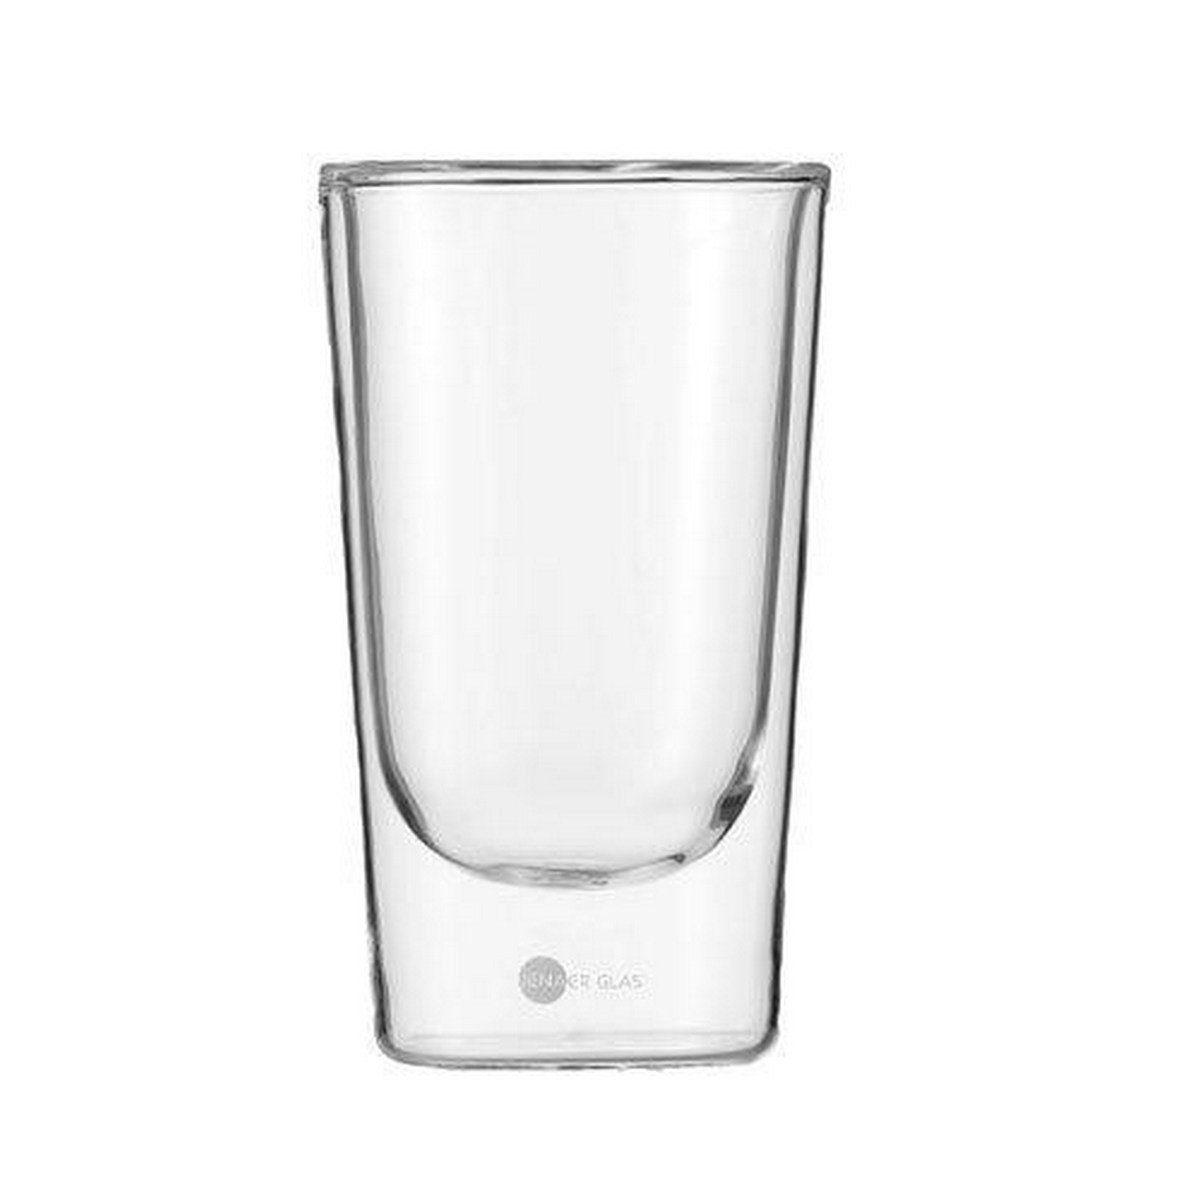 Jenaer Glas Becher Gourmet Food & Drinks Hot'n Cool, Borosilikatglas, 352 ml / h: 142 mm